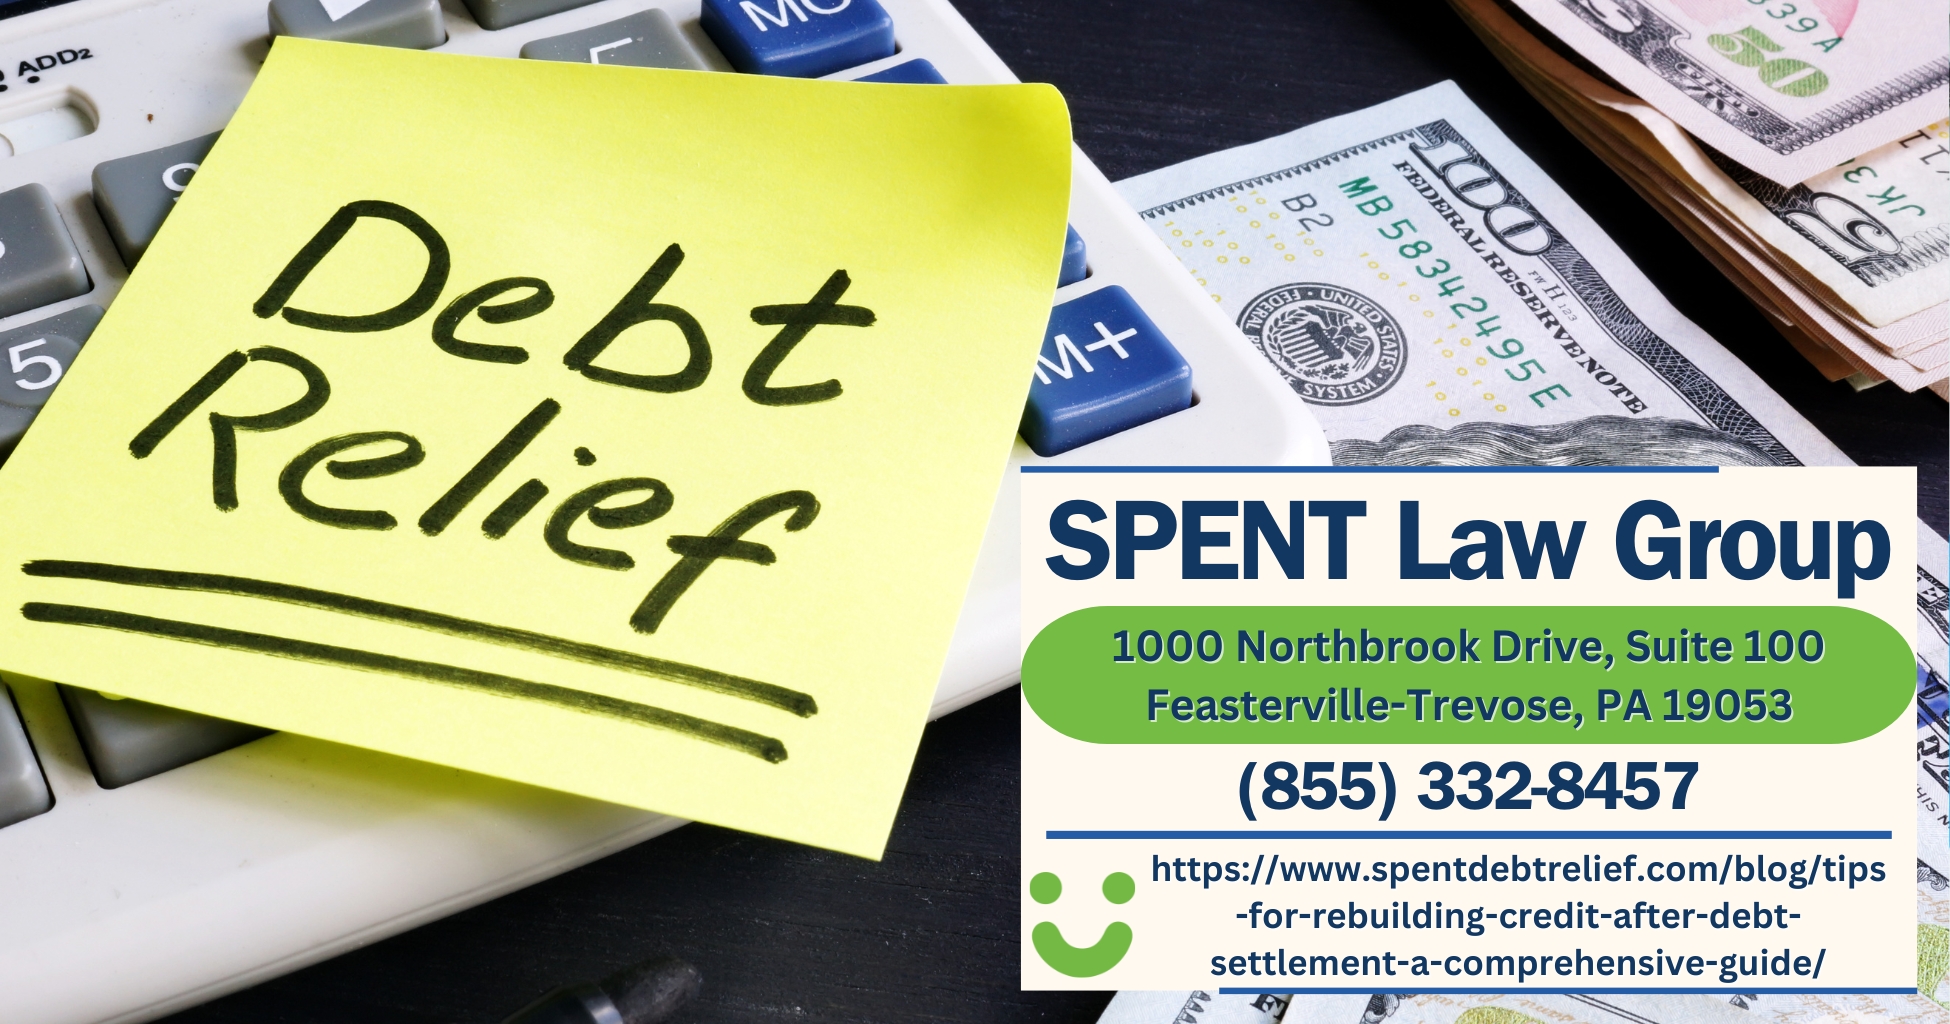 SPENT Law Group's Debt Settlement Attorneys Unveil Guide to Rebuild Credit After Debt Settlement